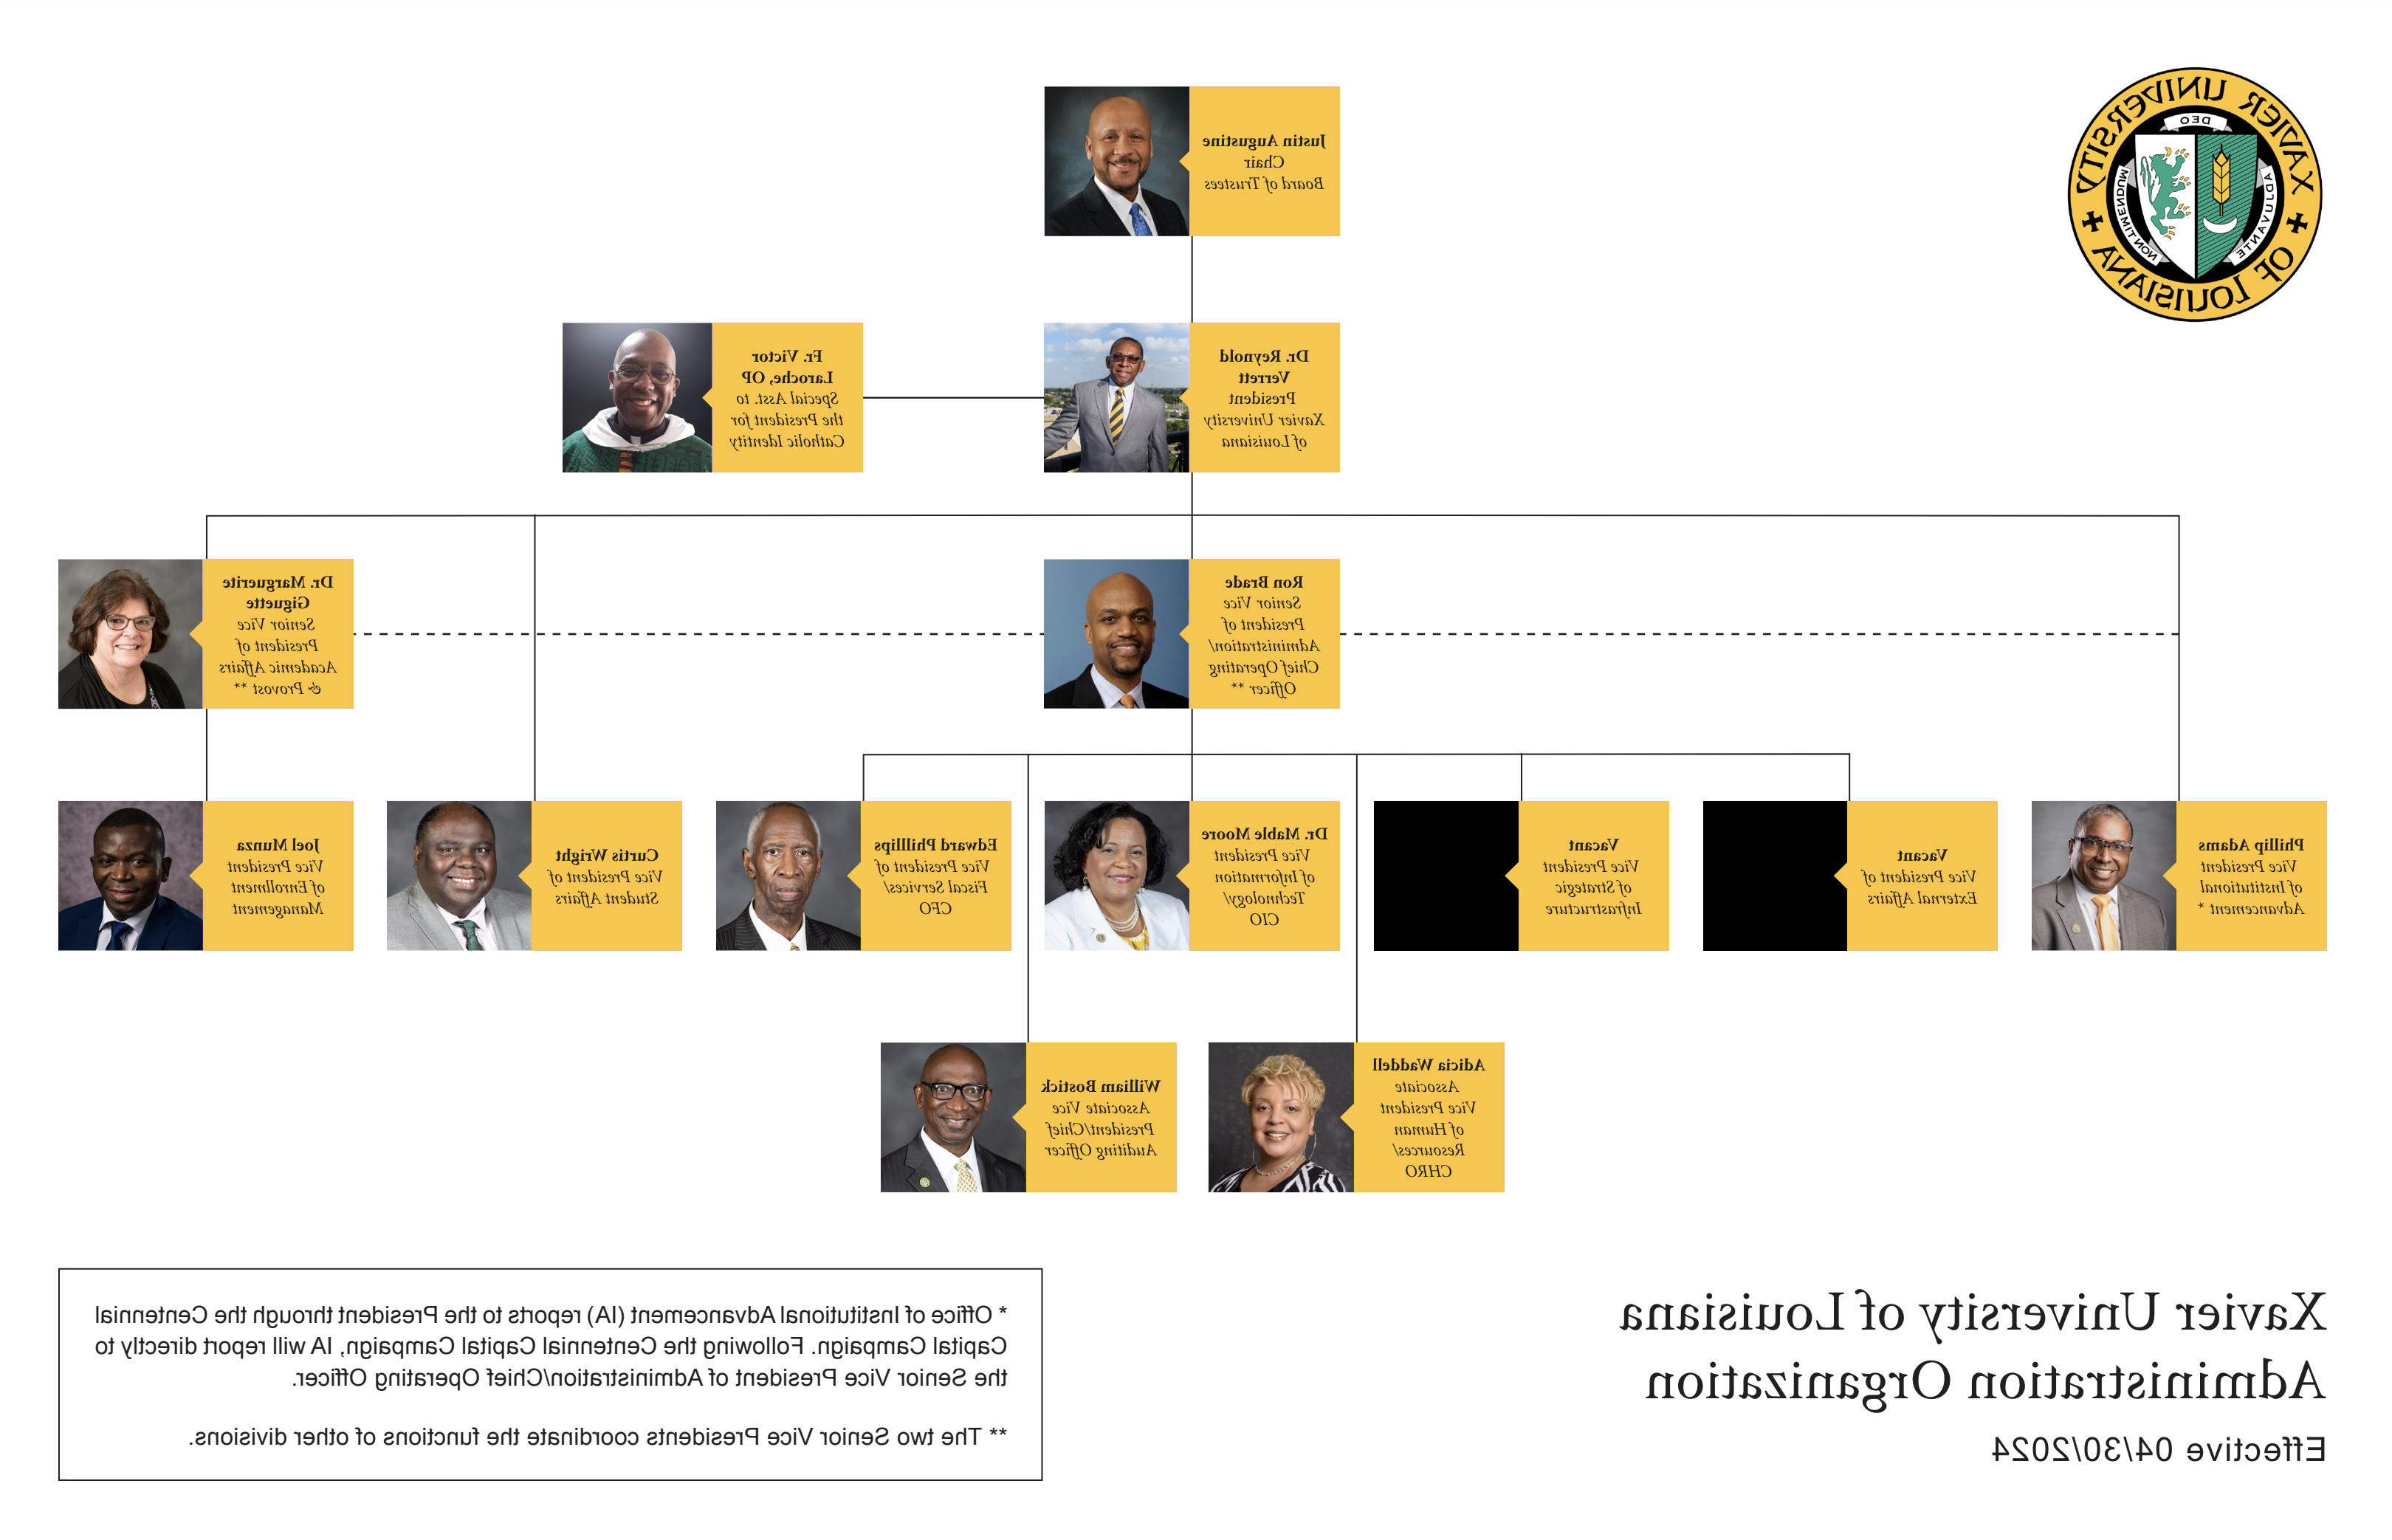 Administration Organizational Chart